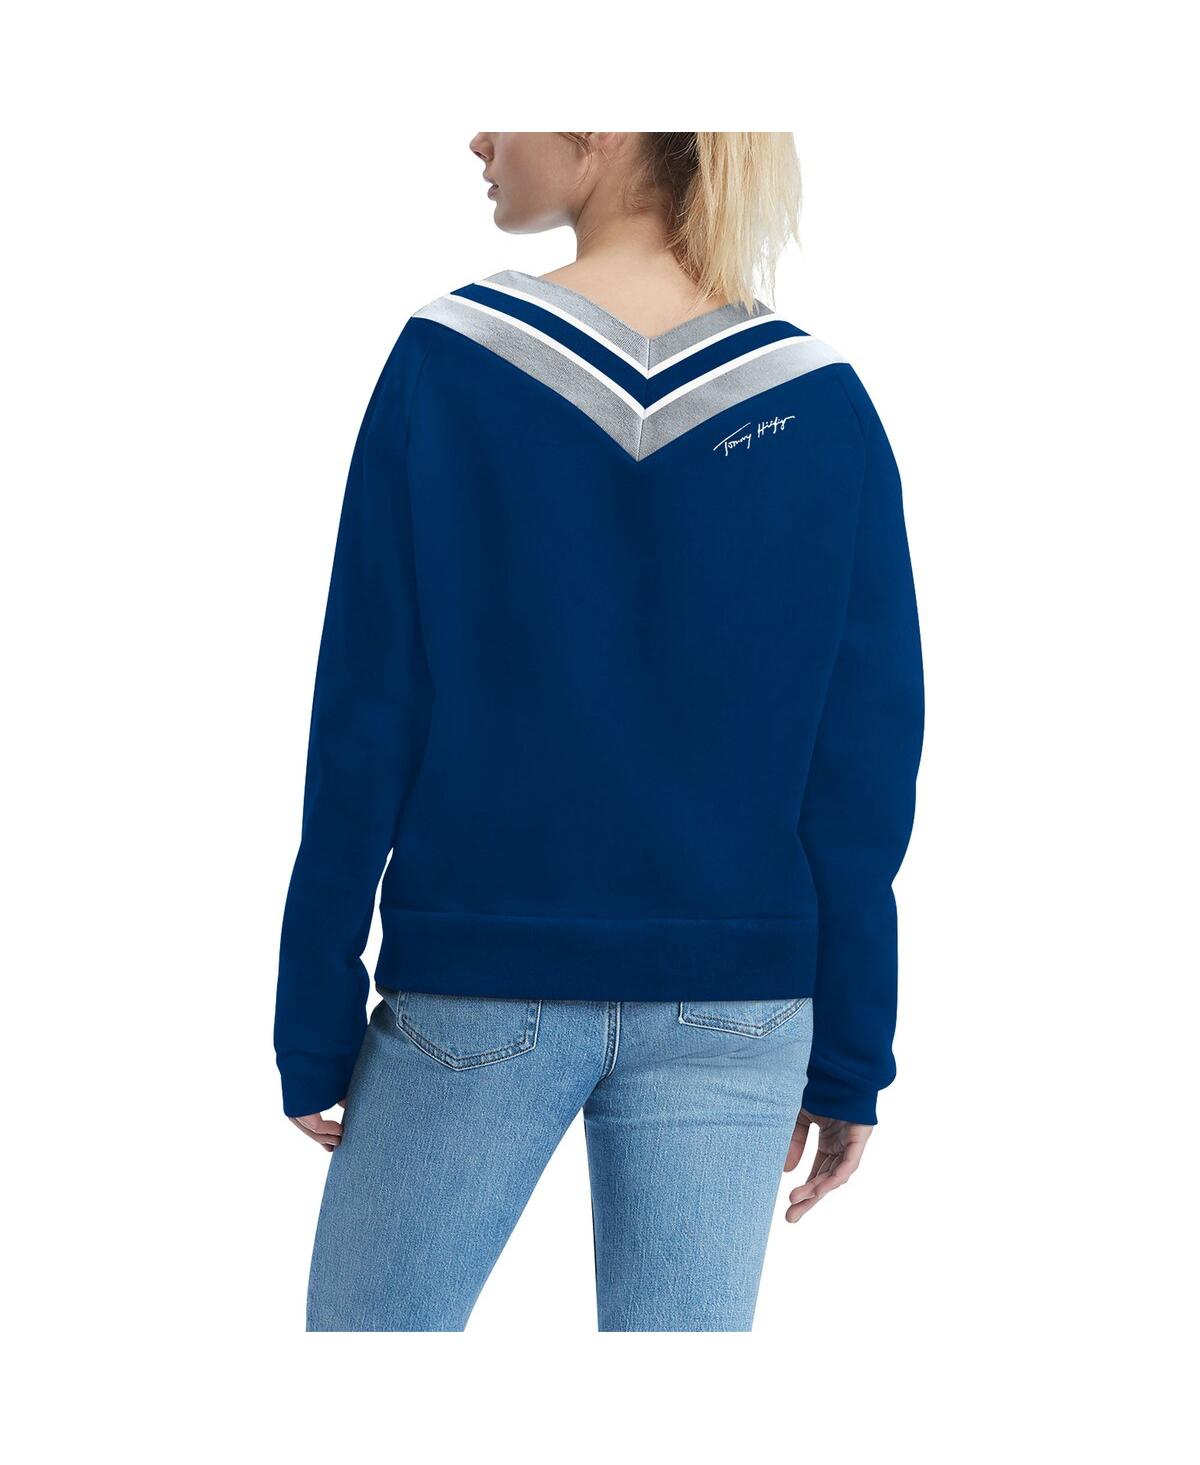 Shop Tommy Hilfiger Women's  Royal Indianapolis Colts Heidi V-neck Pullover Sweatshirt